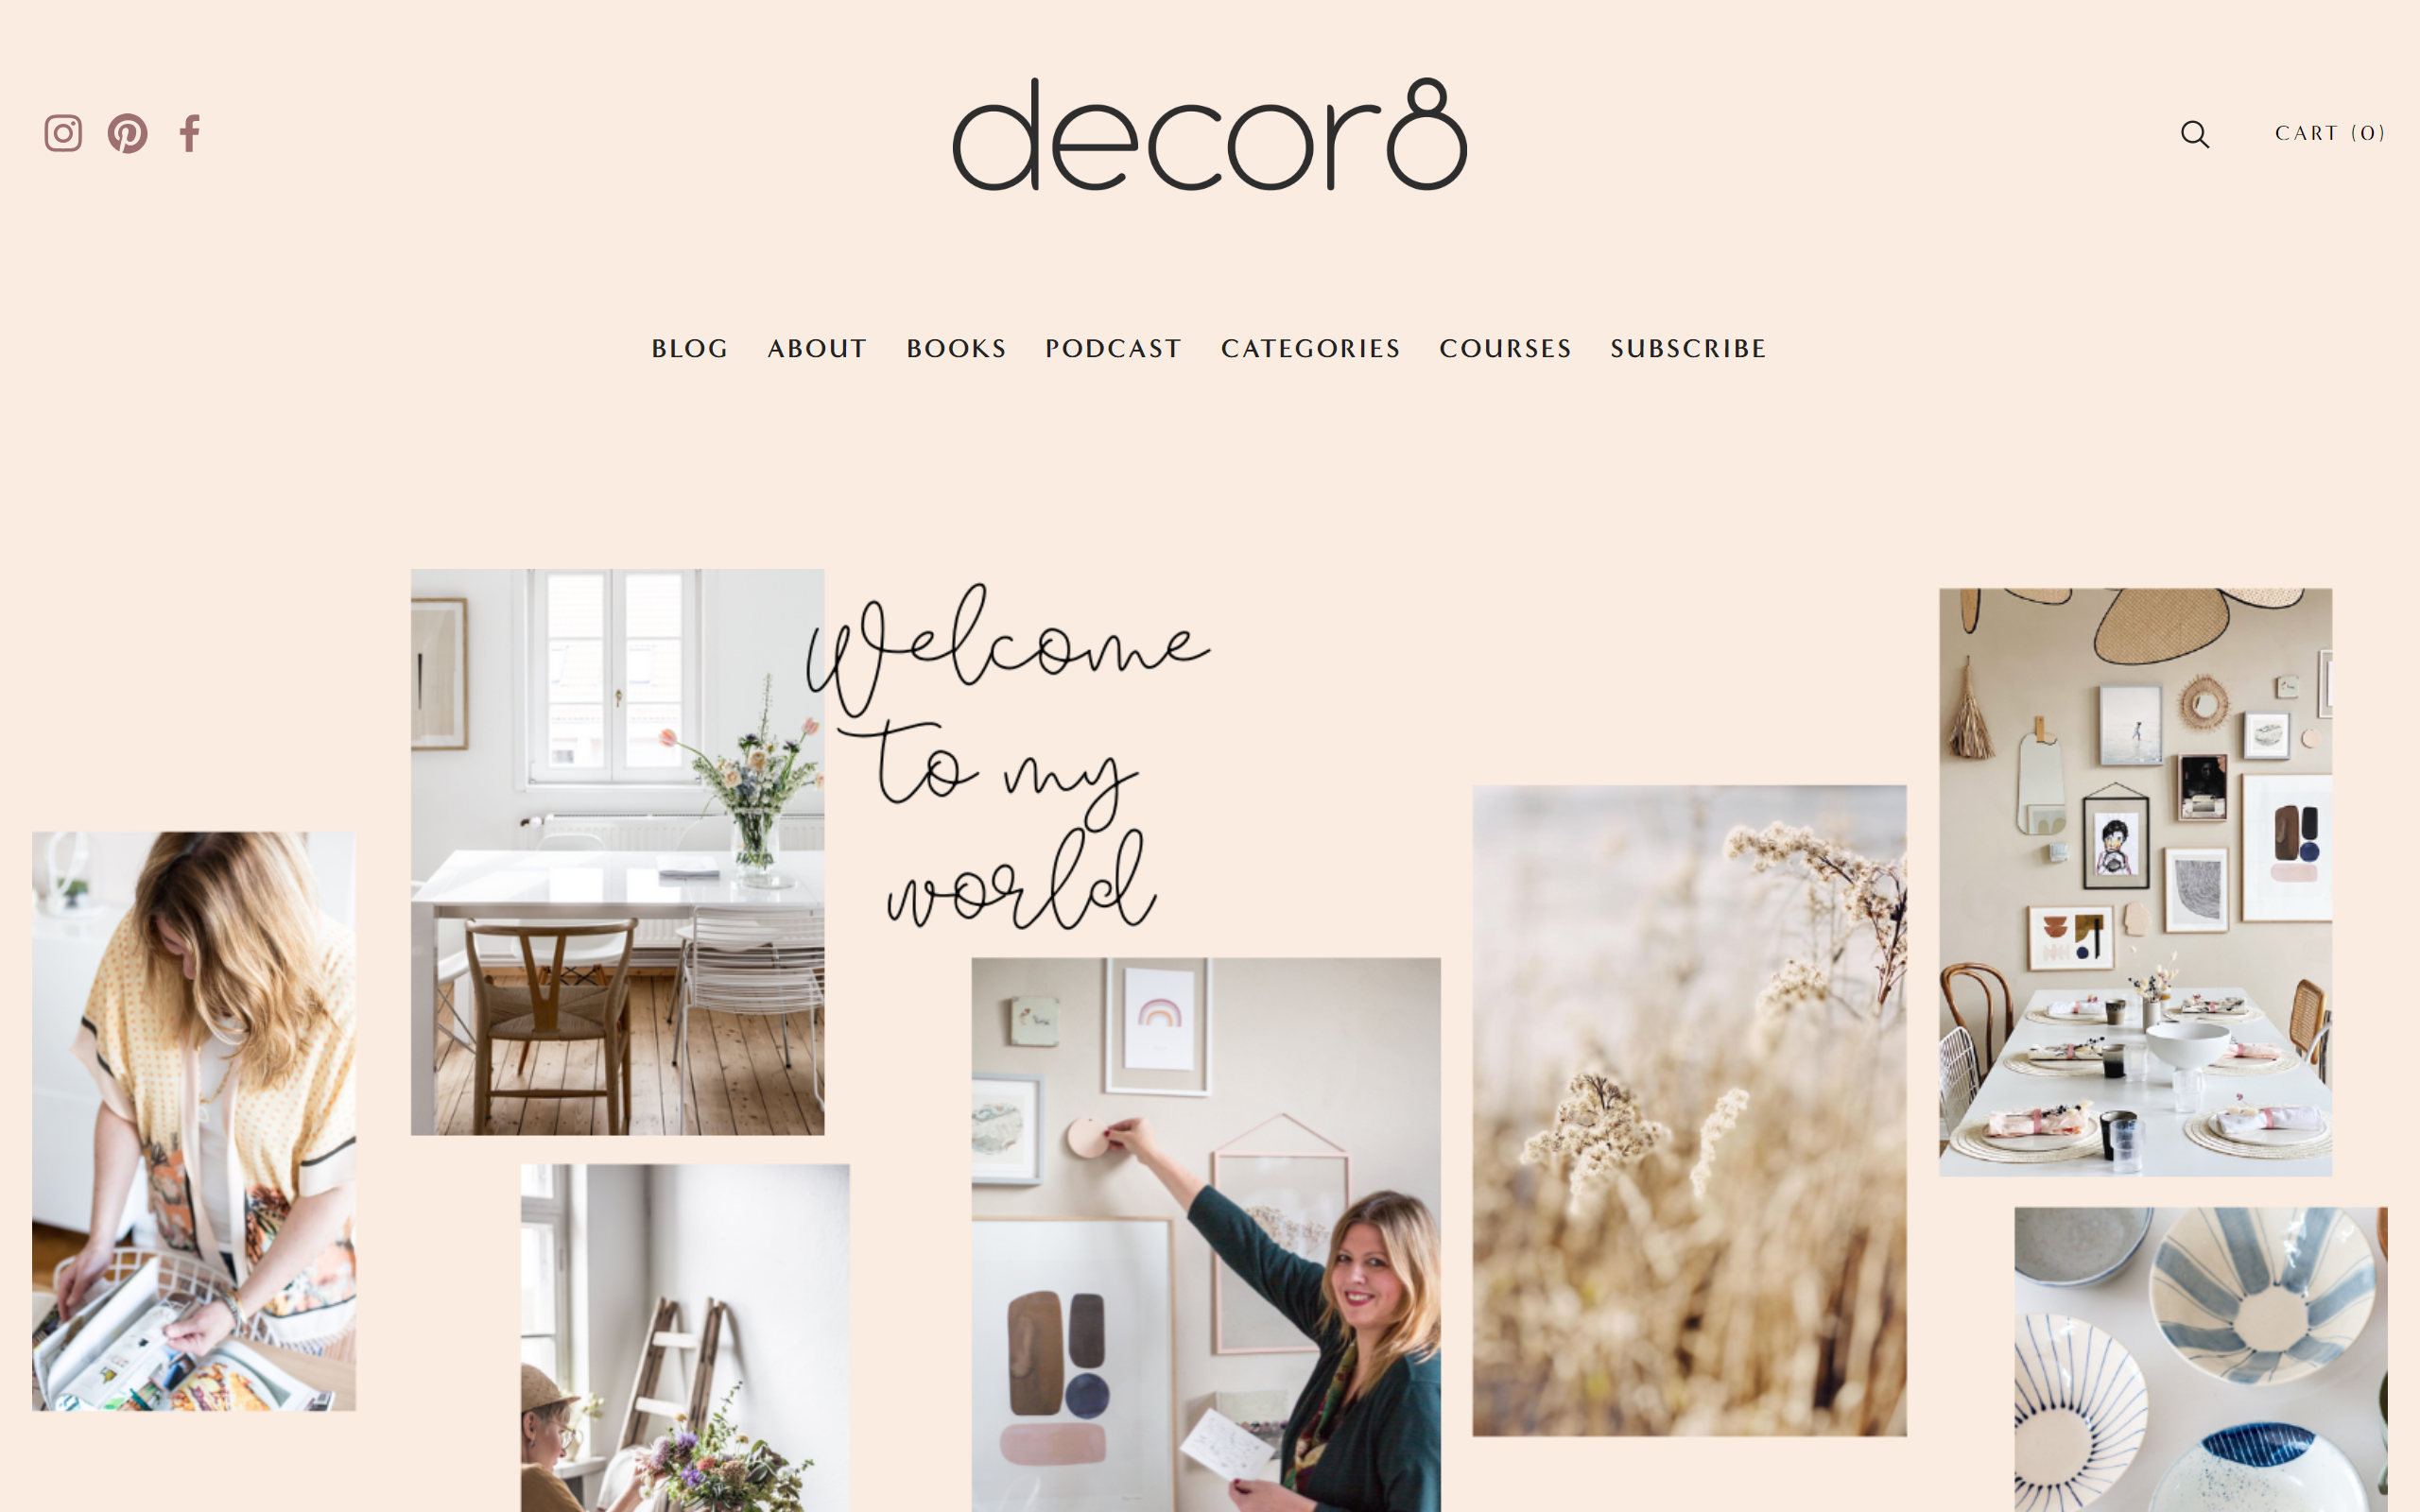 Decor8 interior design blog